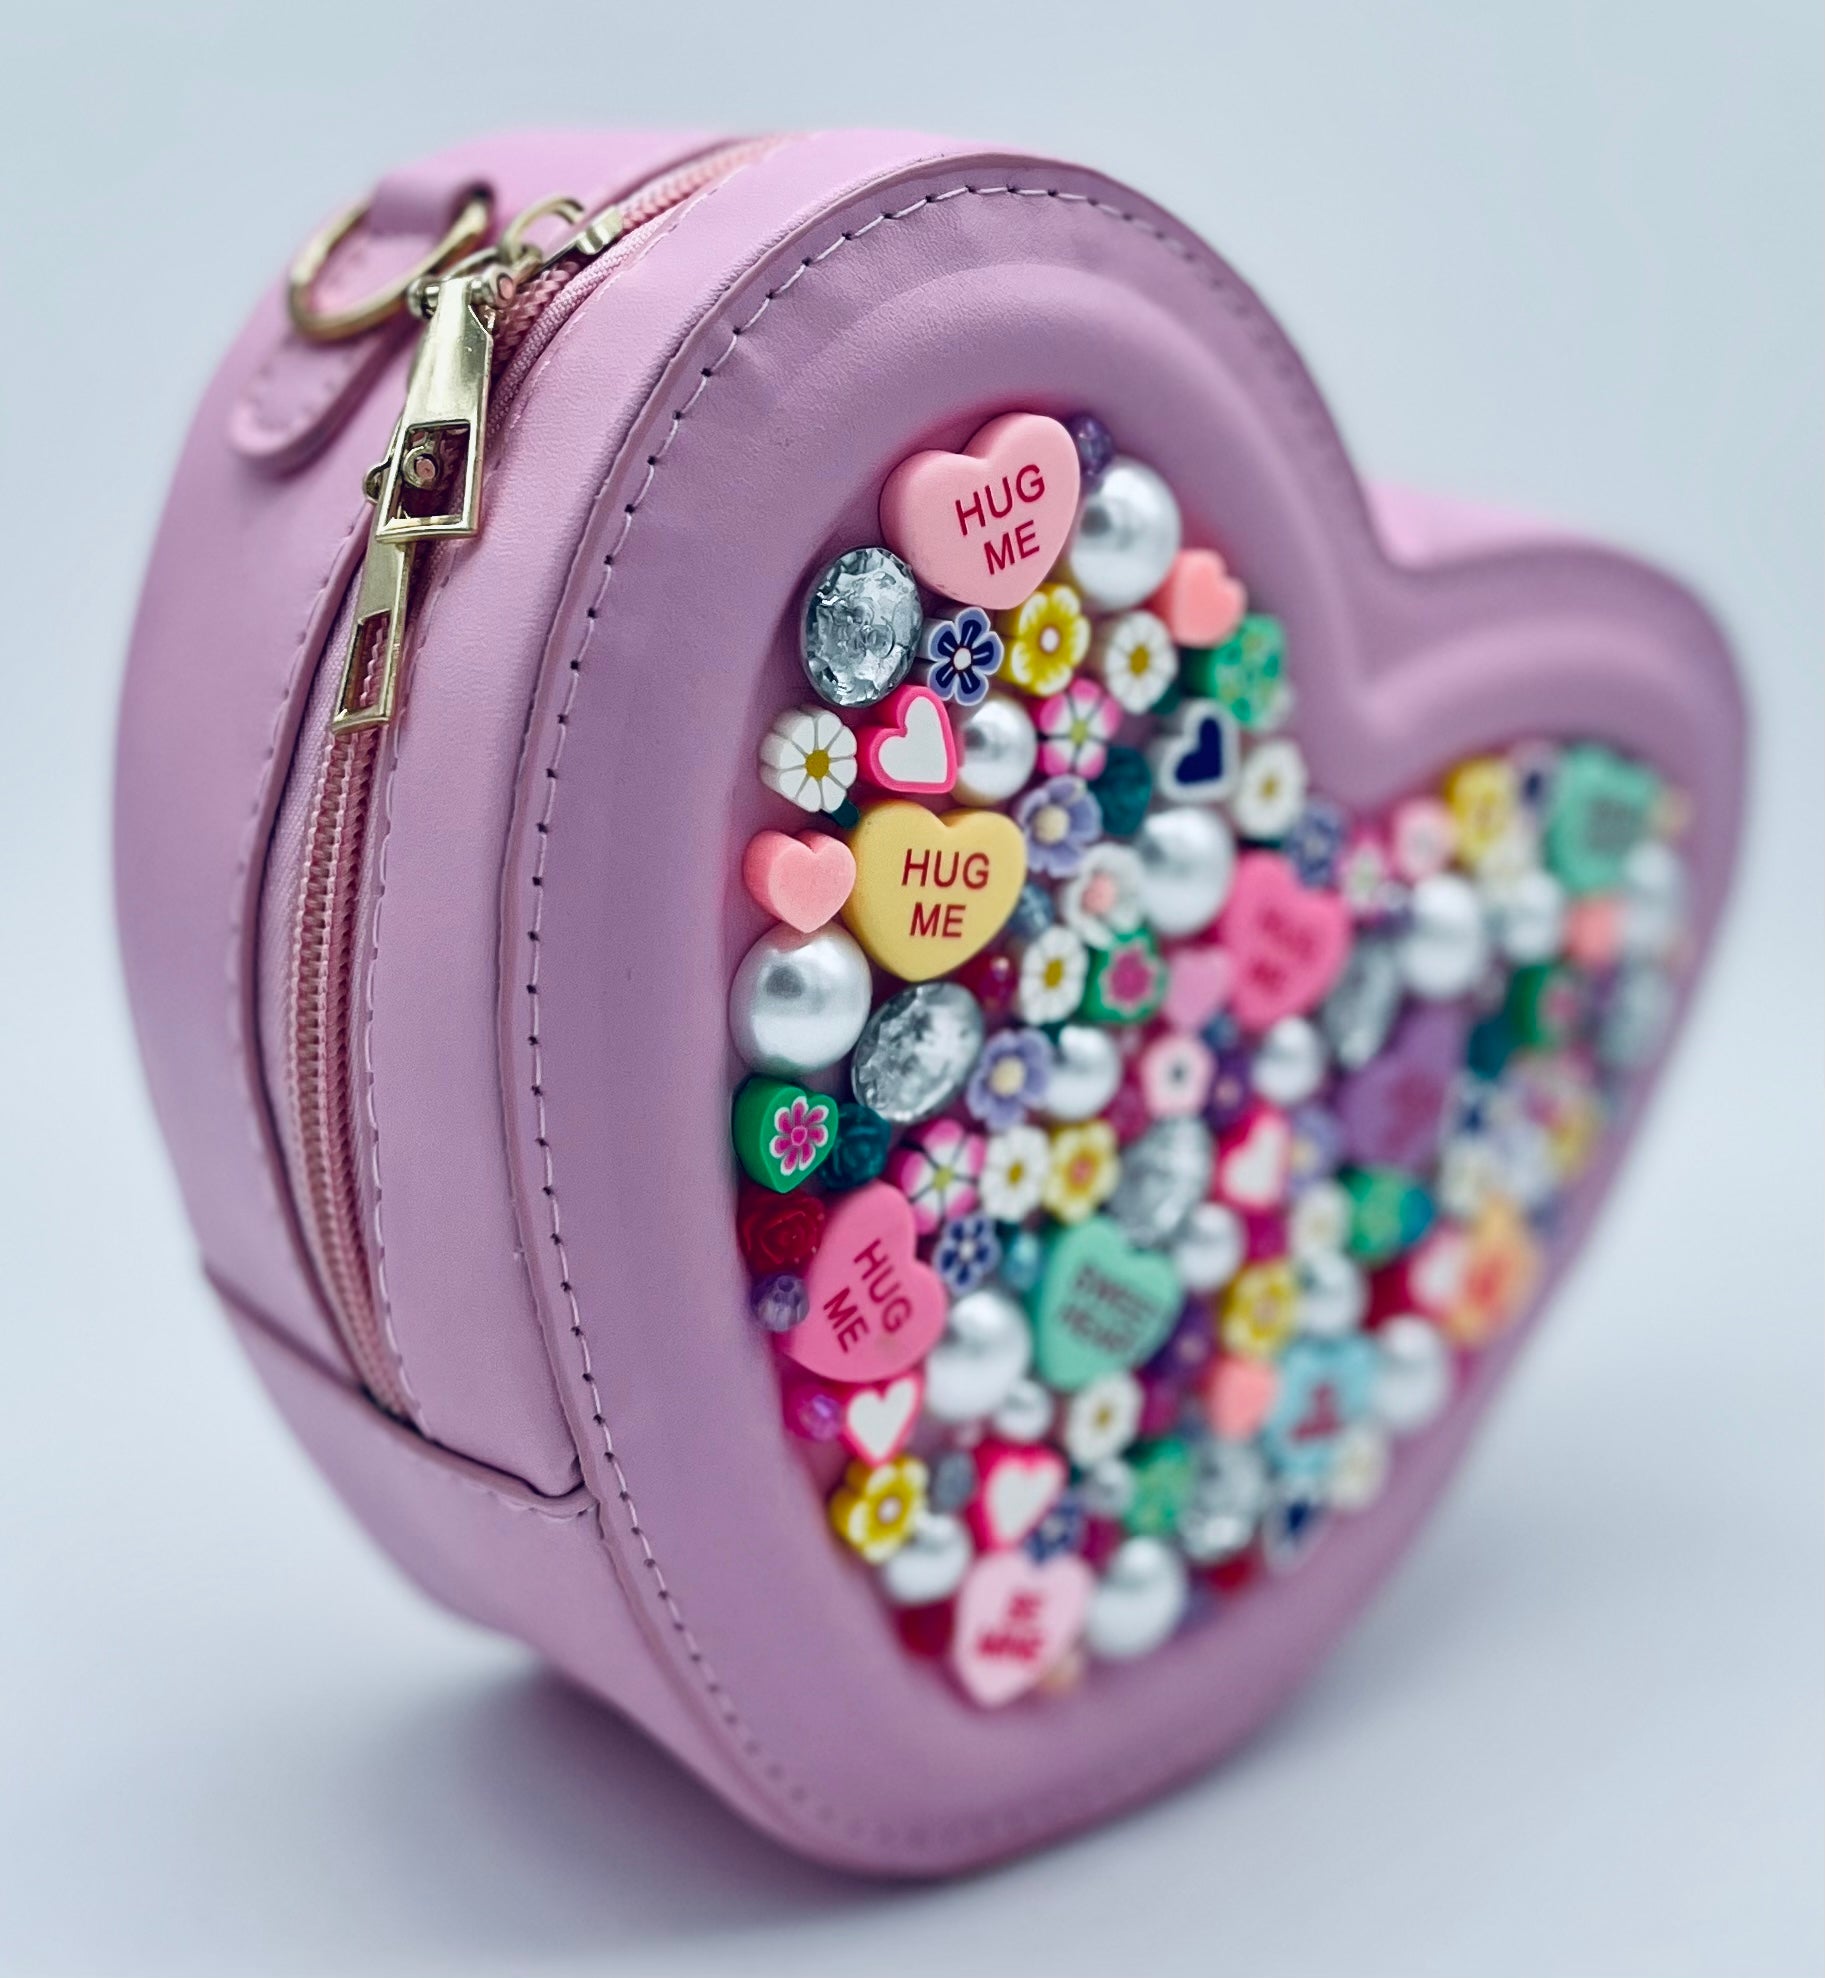 Shop Novelty Shaped Handbags, Bags, Purses: Triangle, Heart, Rounded,  Pleated, Wavy Bottom - Fashionista